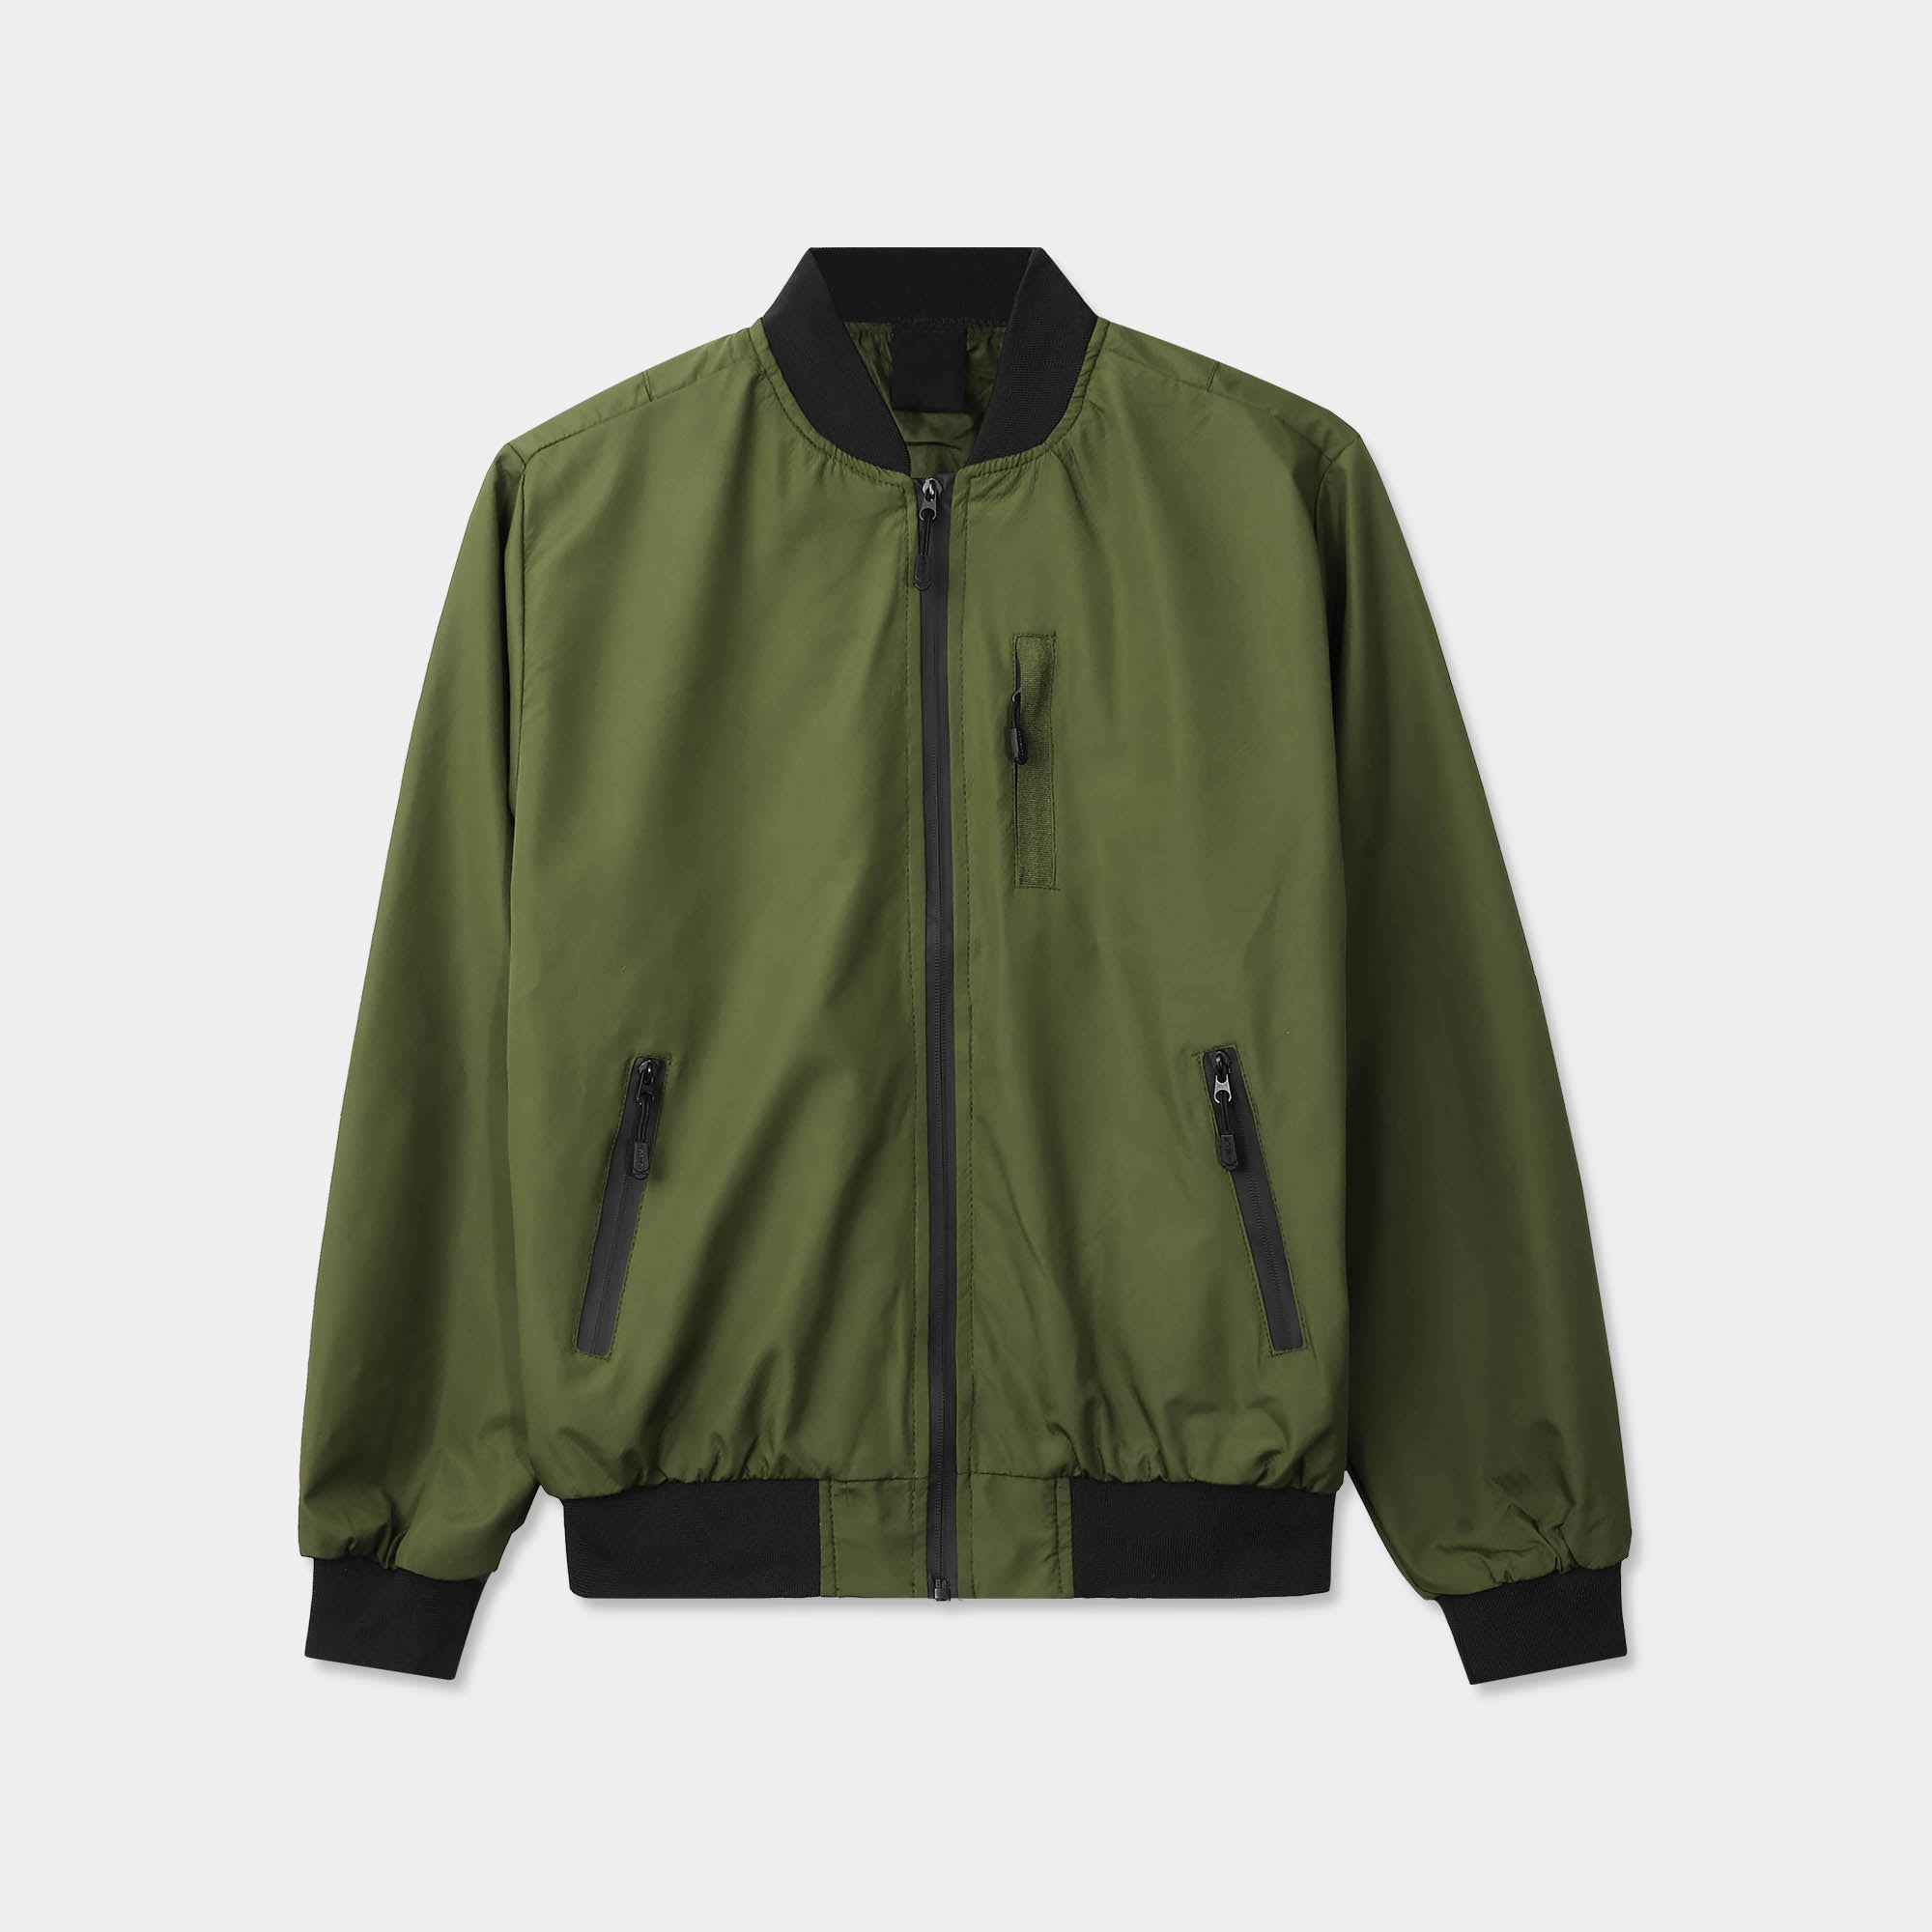 bomber jacket_mens bomber jacket_aviators jacket_aviator jacket mens_oversized bomber jacket_best bomber jackets_Olive